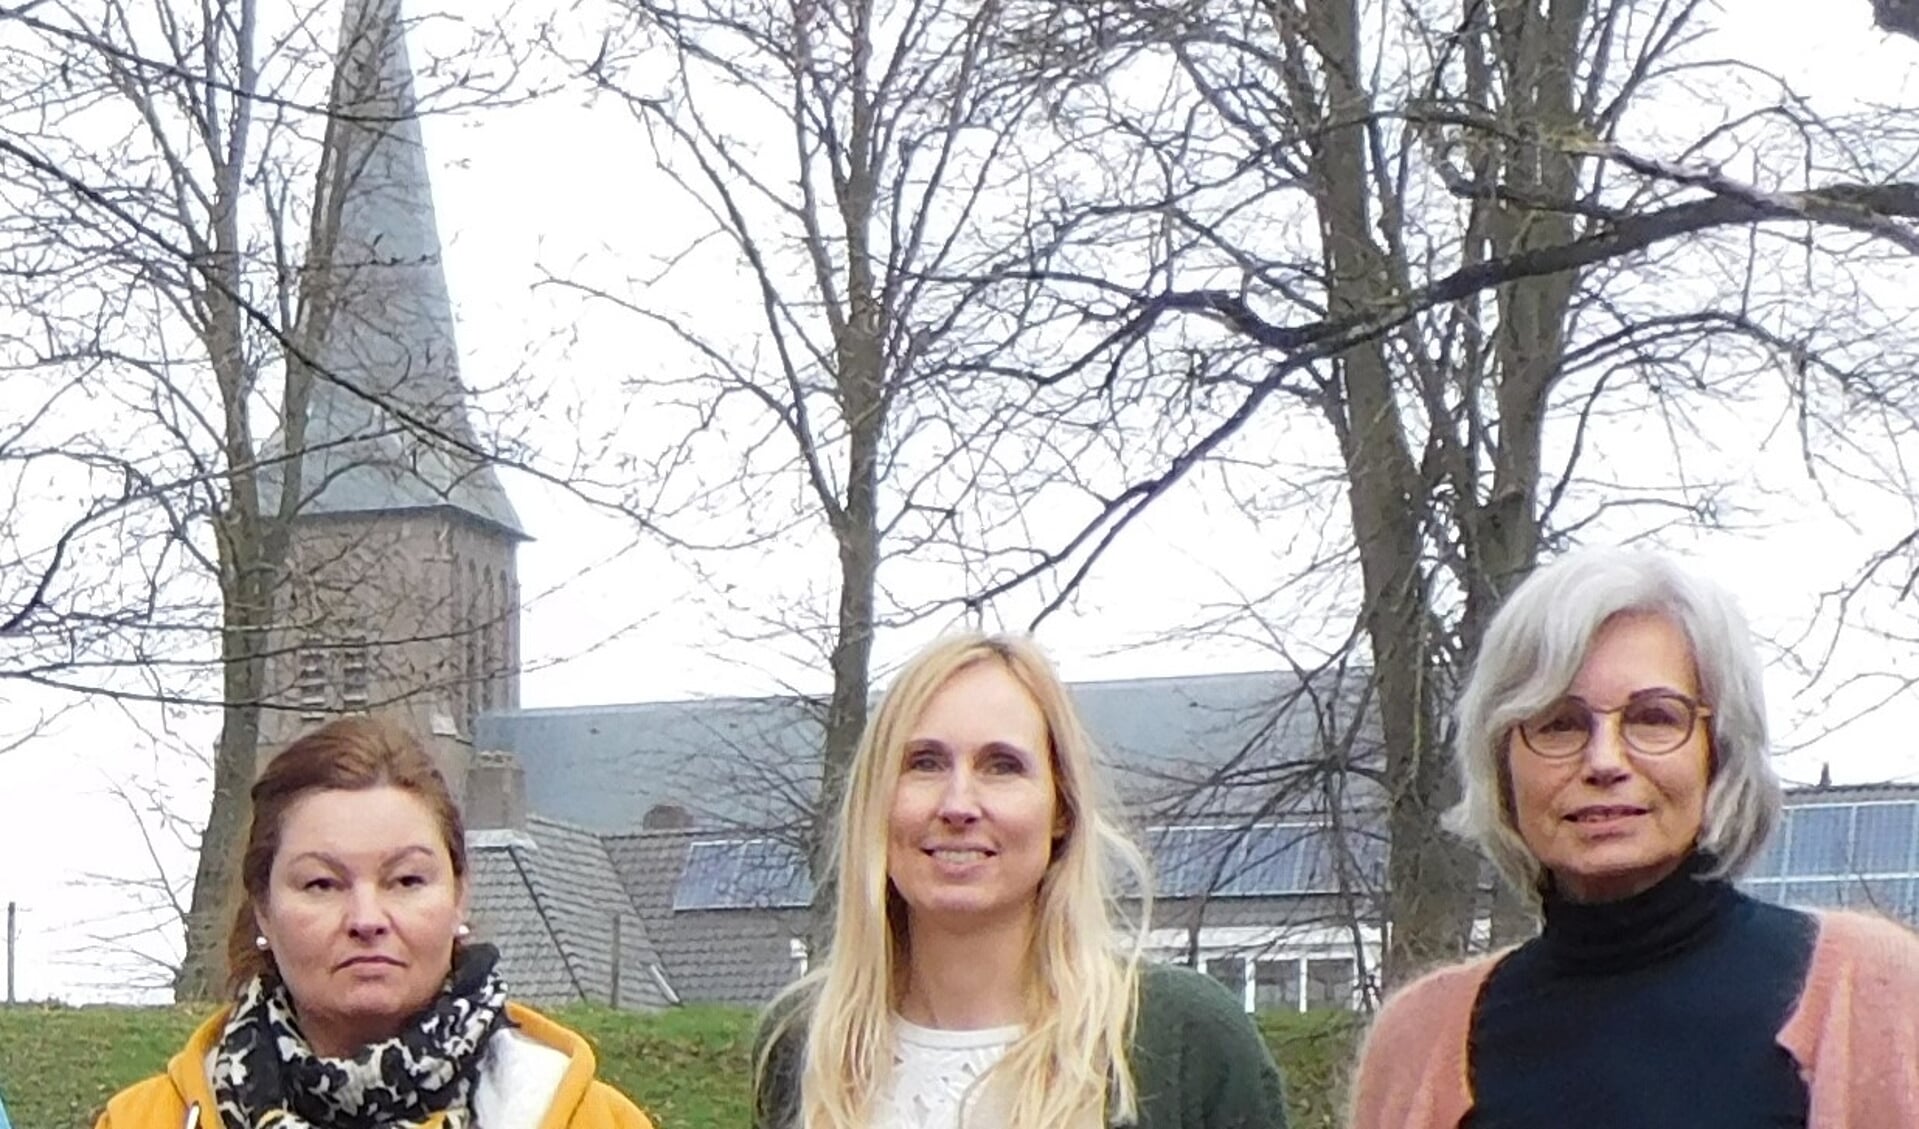 Vlnr: Maureen ten Hoope, Alieke Hoogma en Grietje Feenstra 